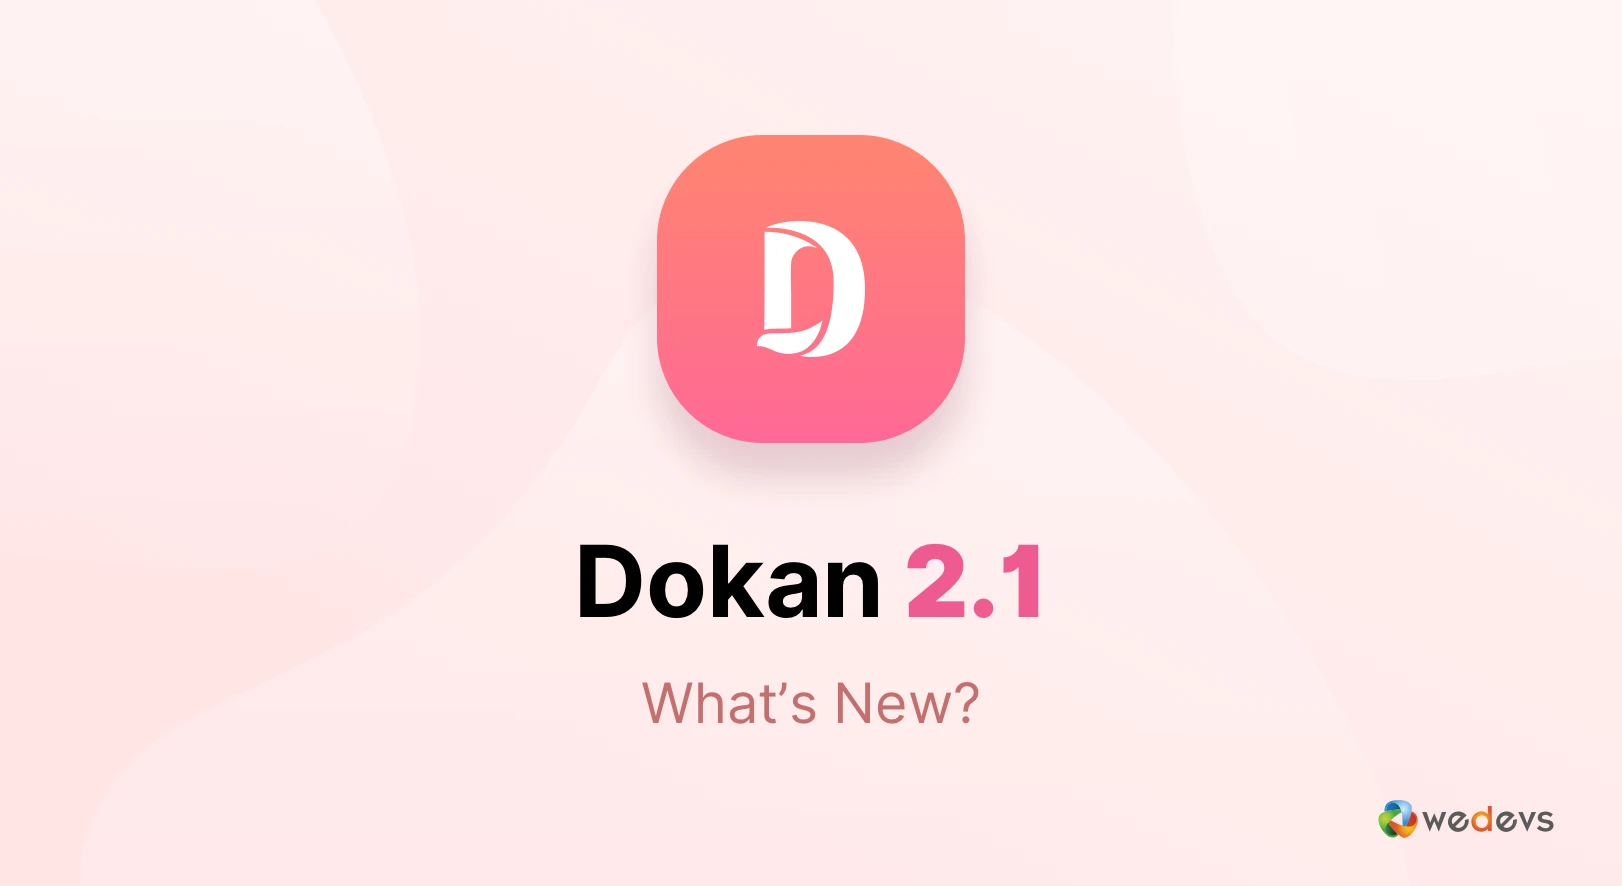 Whats new in Dokan 2.1?